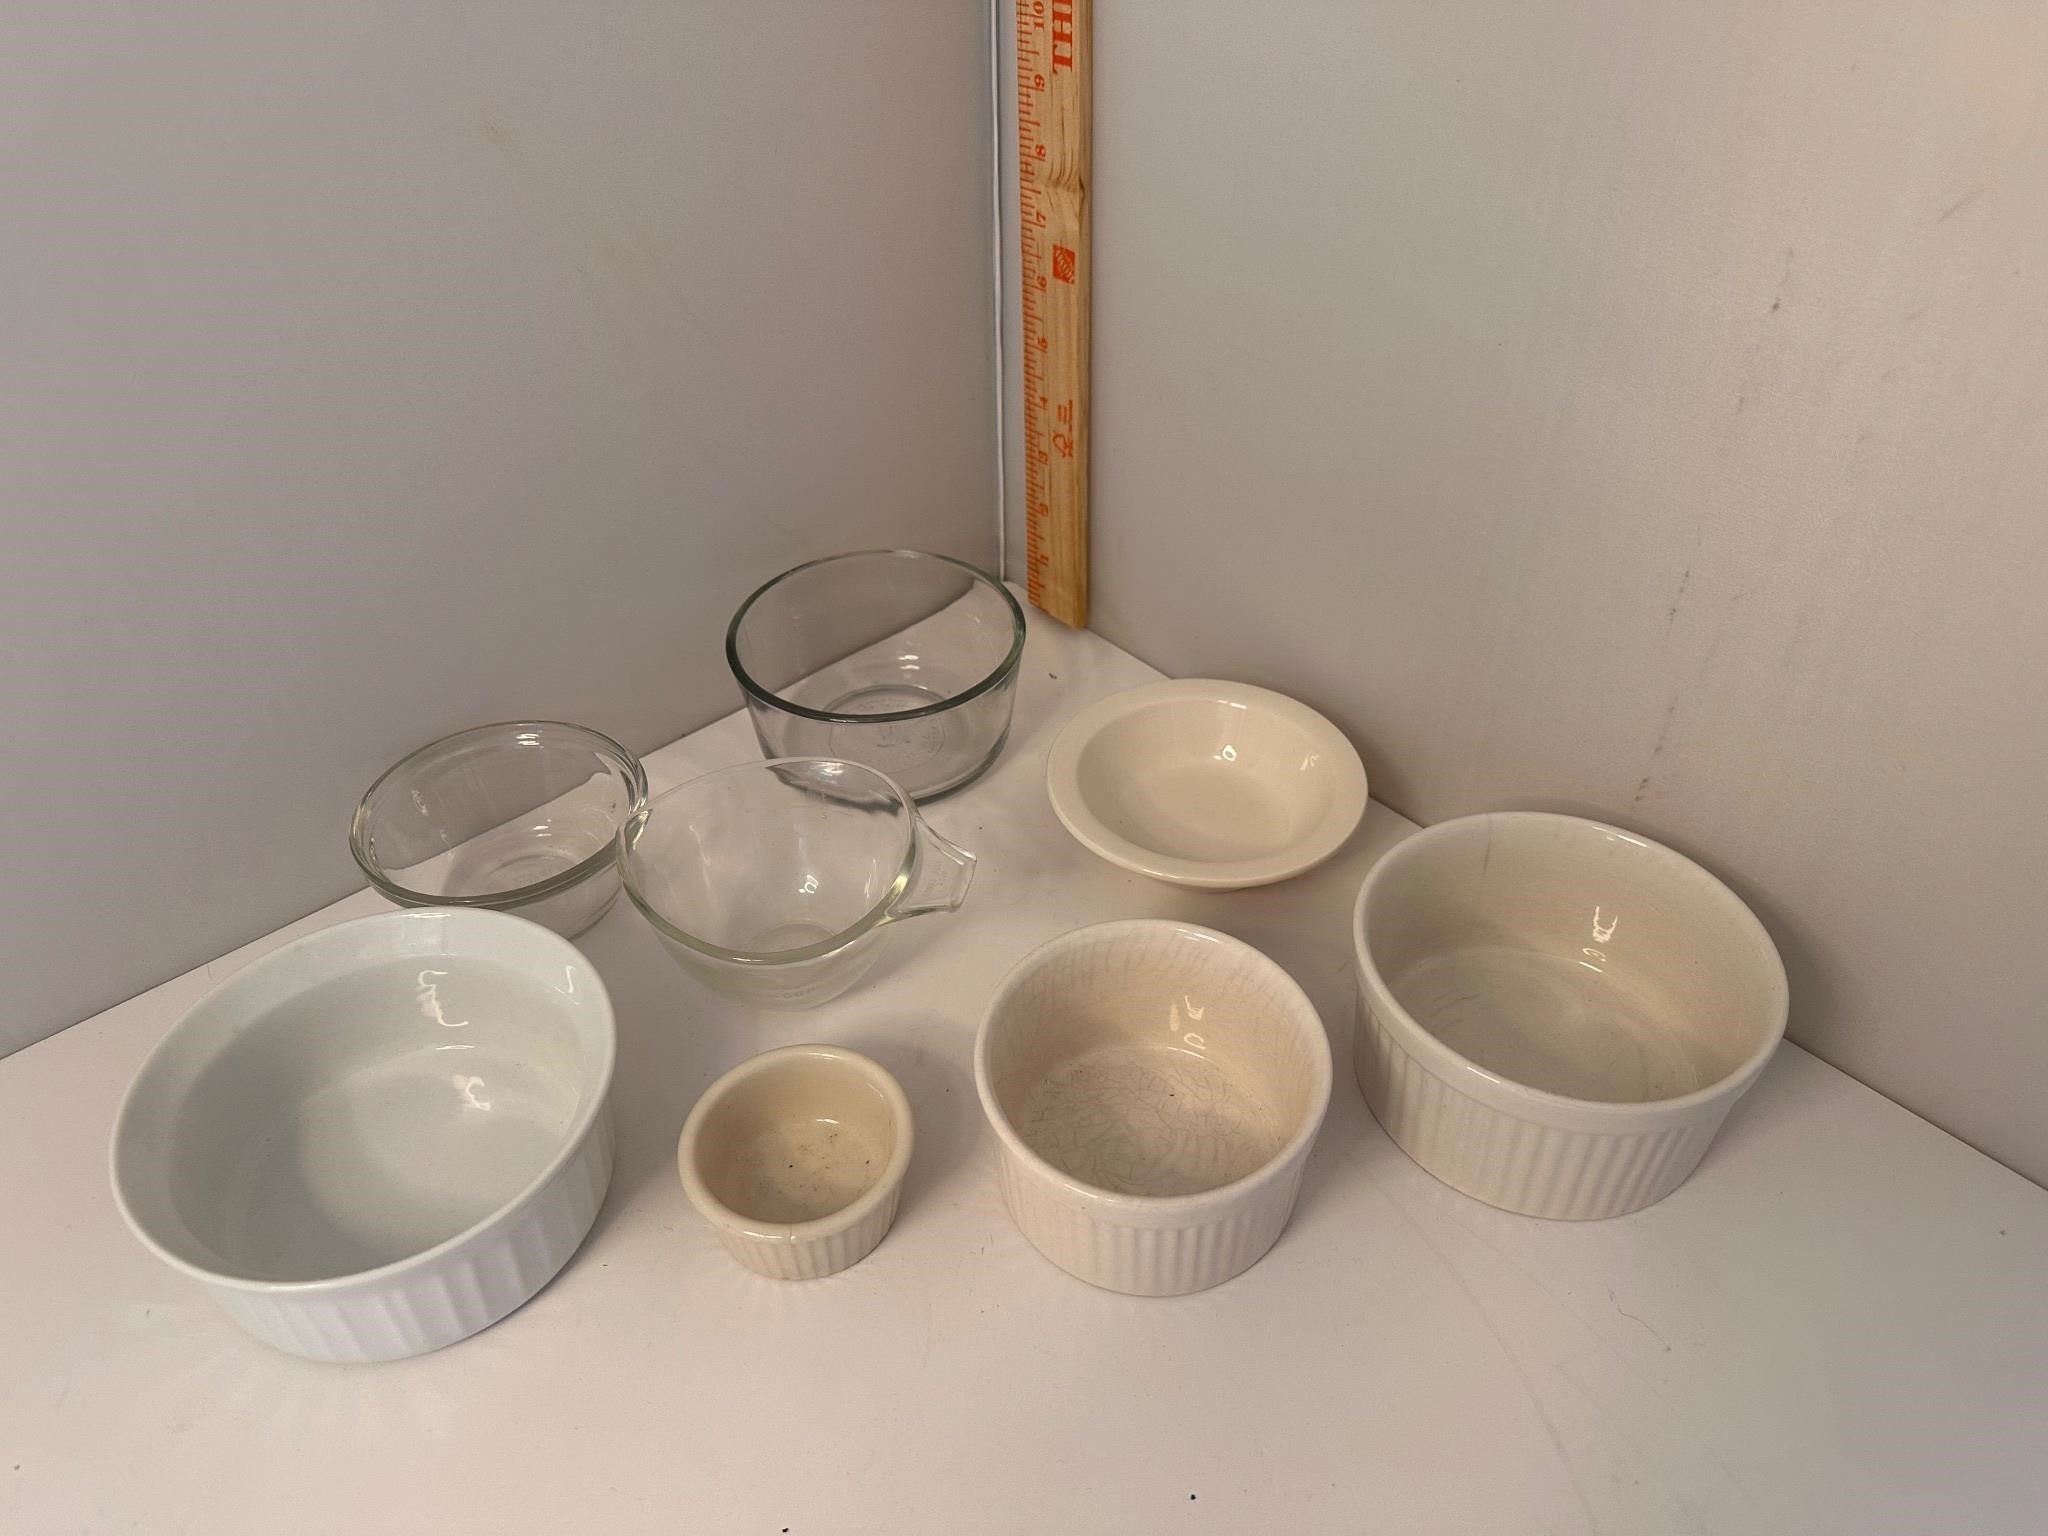 Ramekins, small bowls